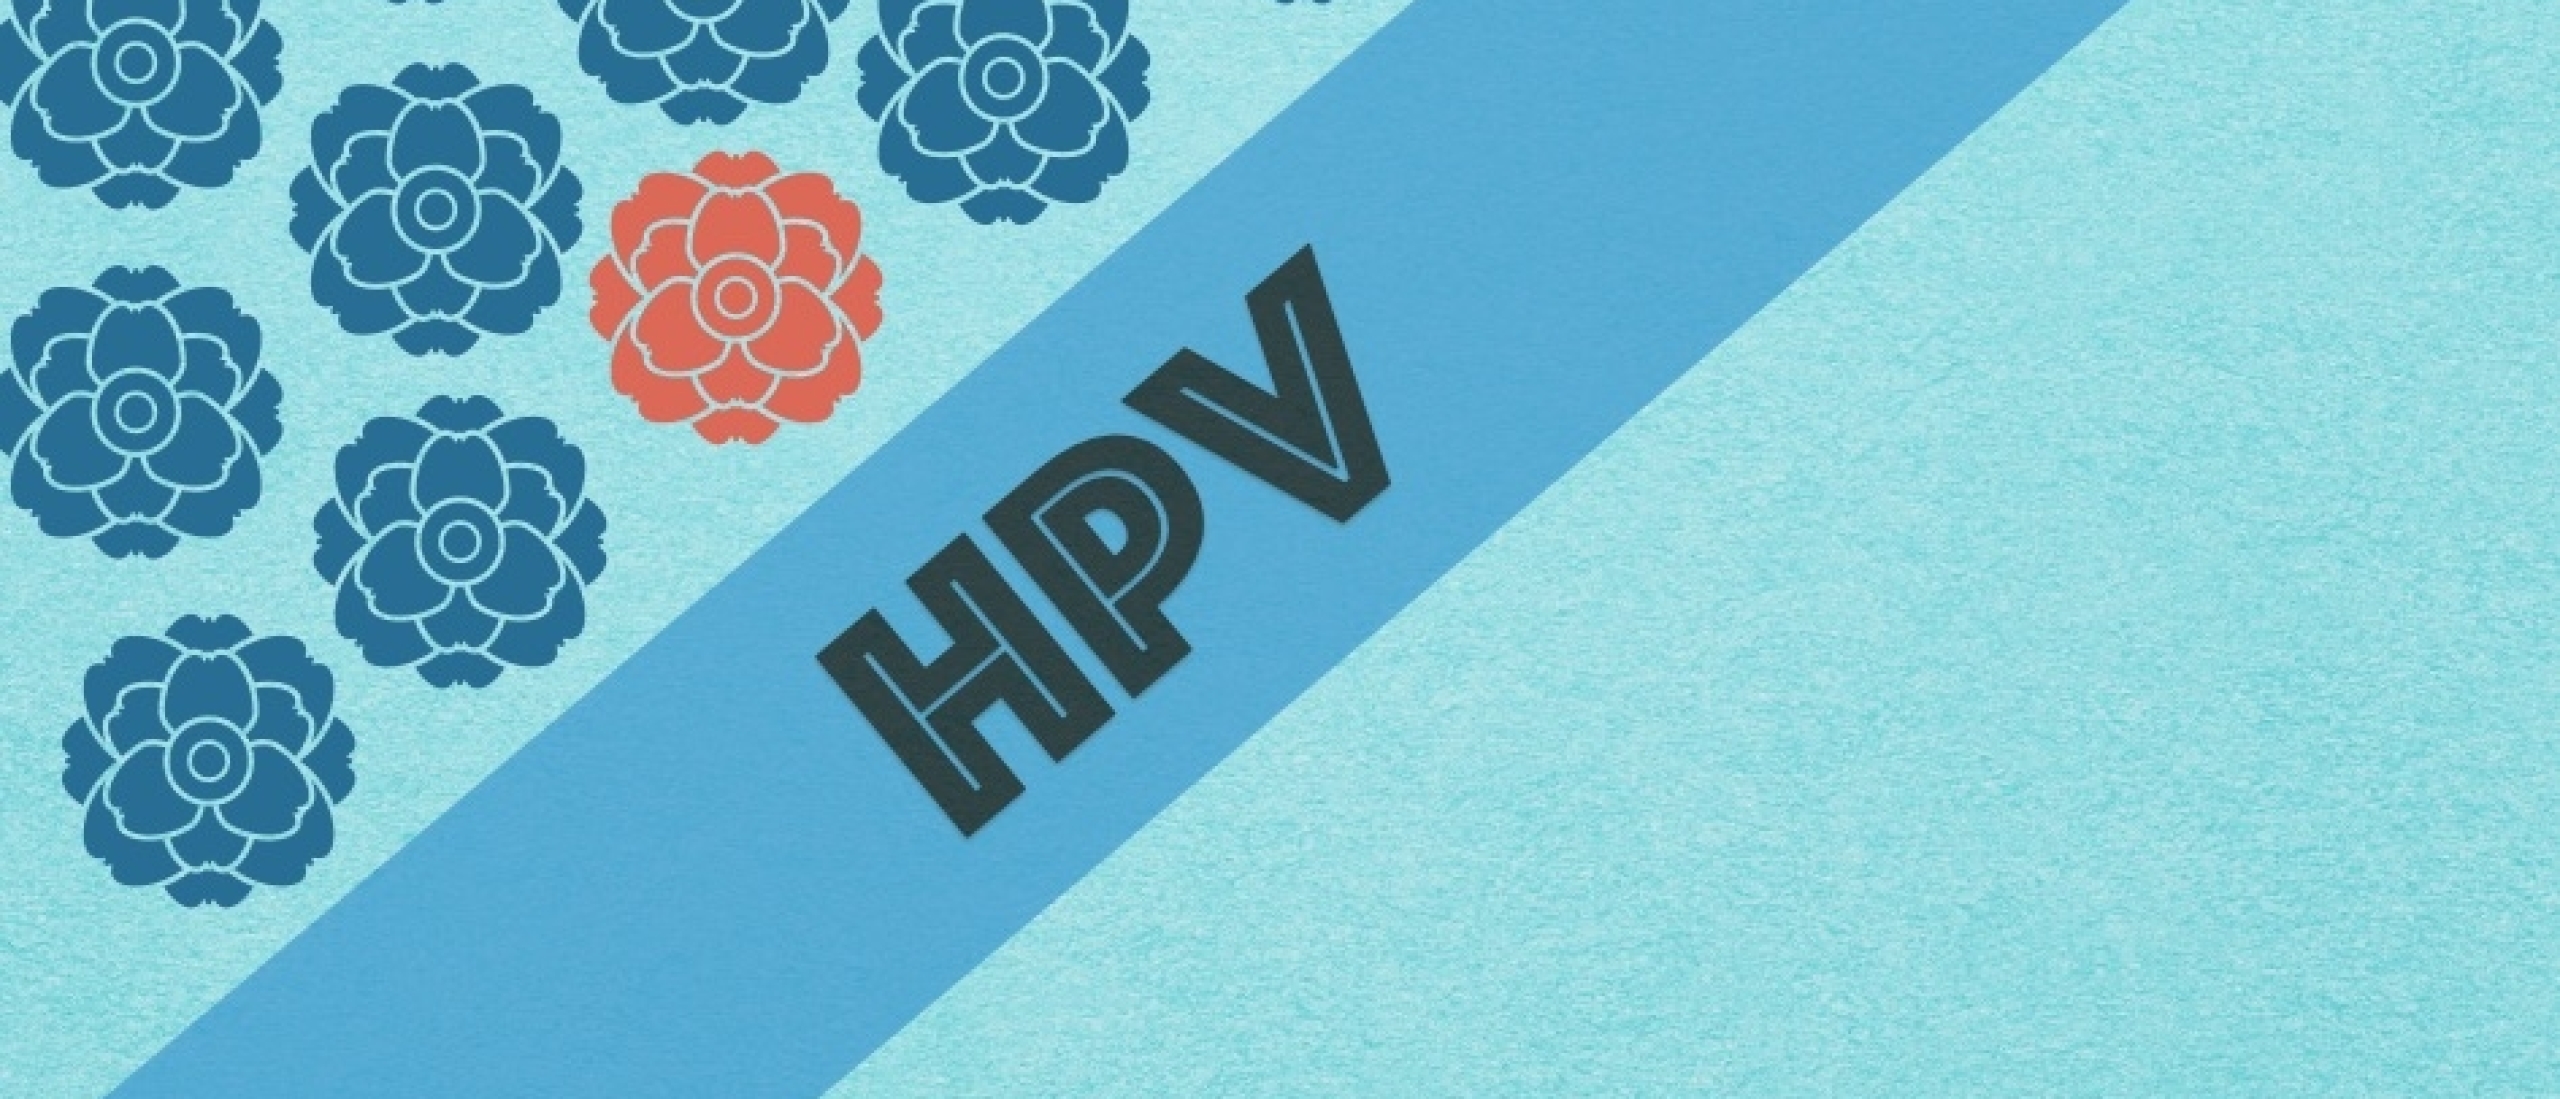 HPV vragen